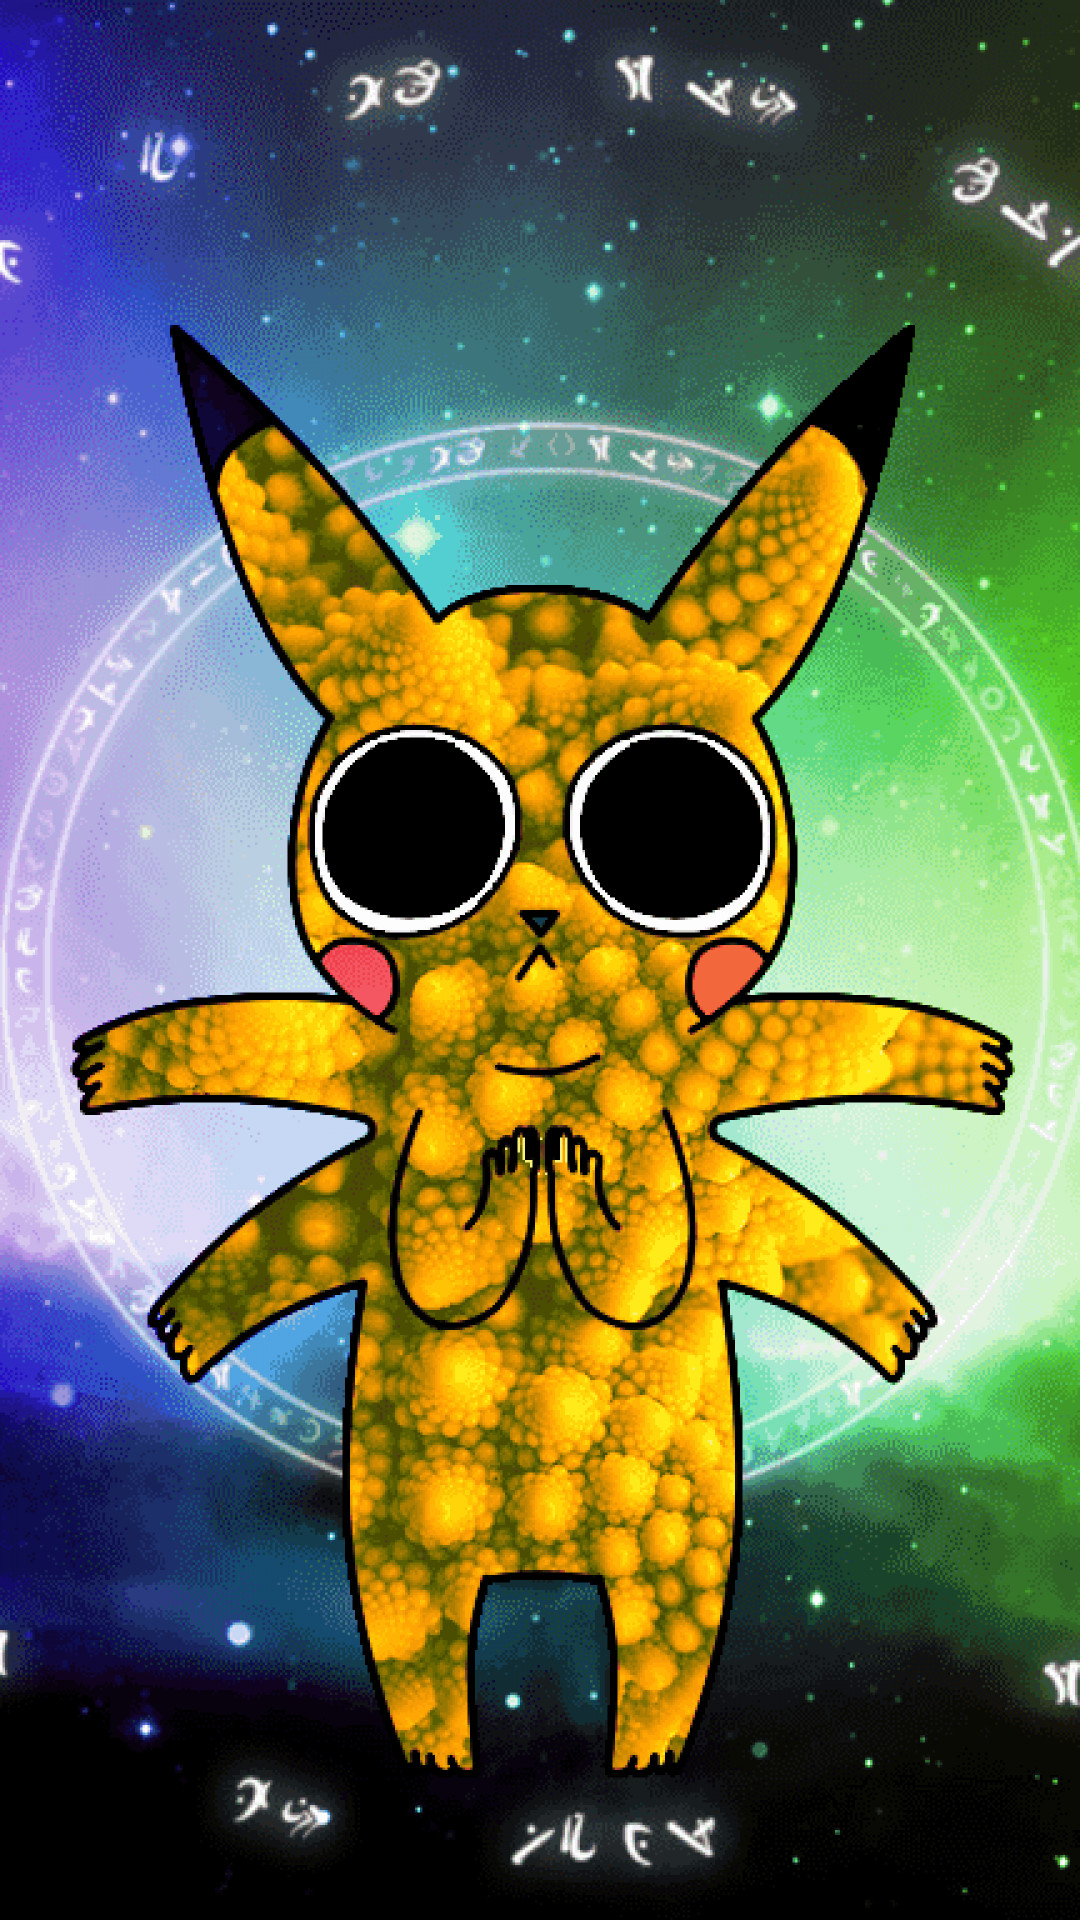 pikachu on acid wallpaper